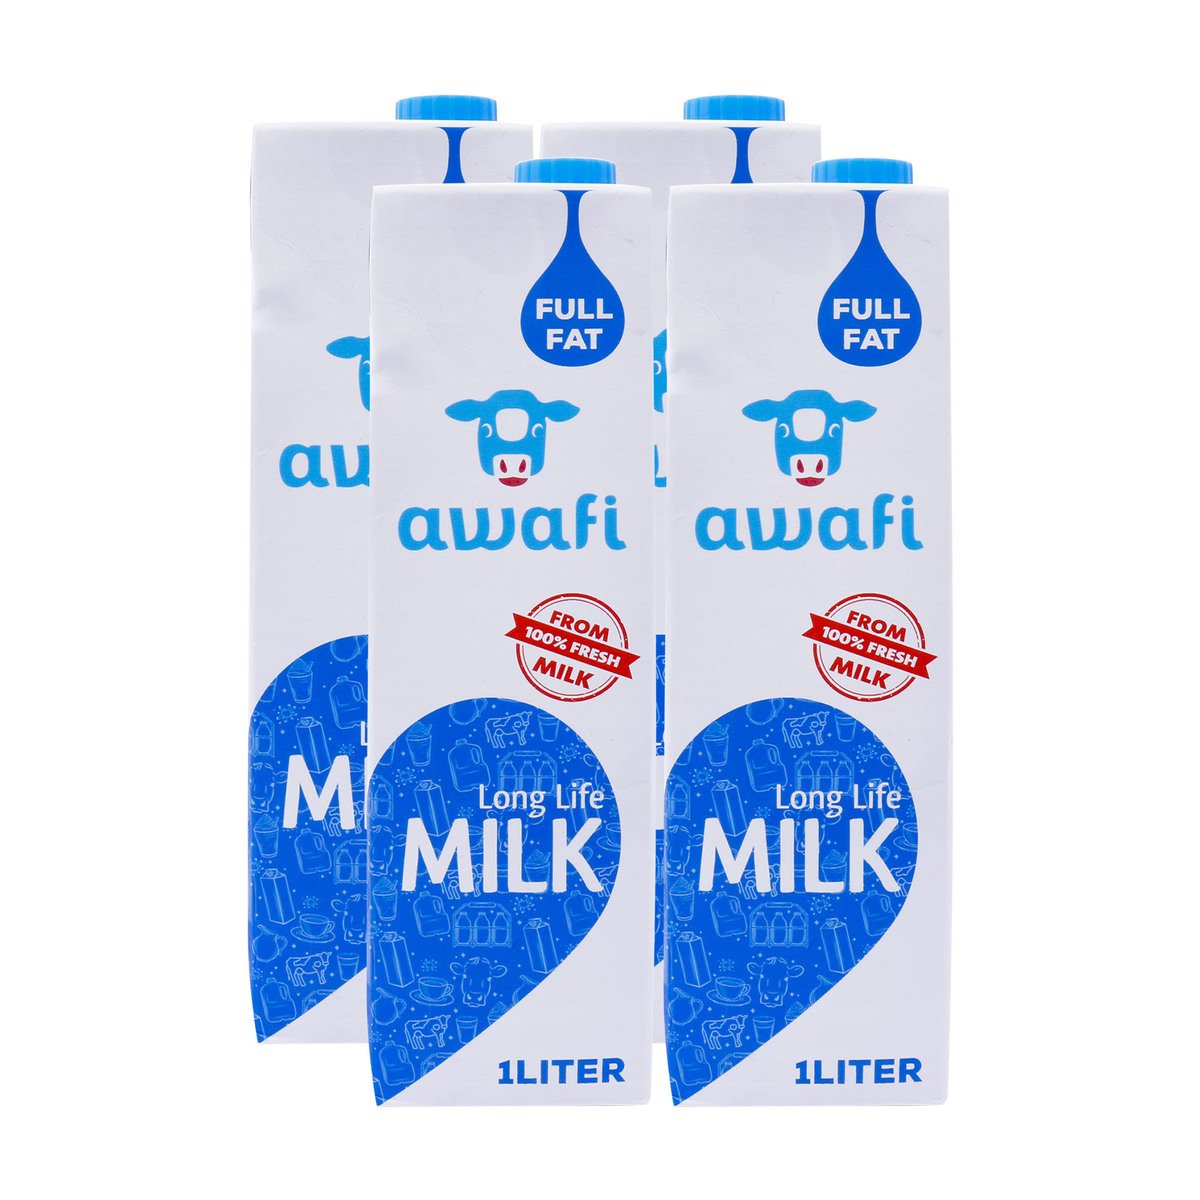 Awafi Full Fat Long Life Milk 4 x 1Litre